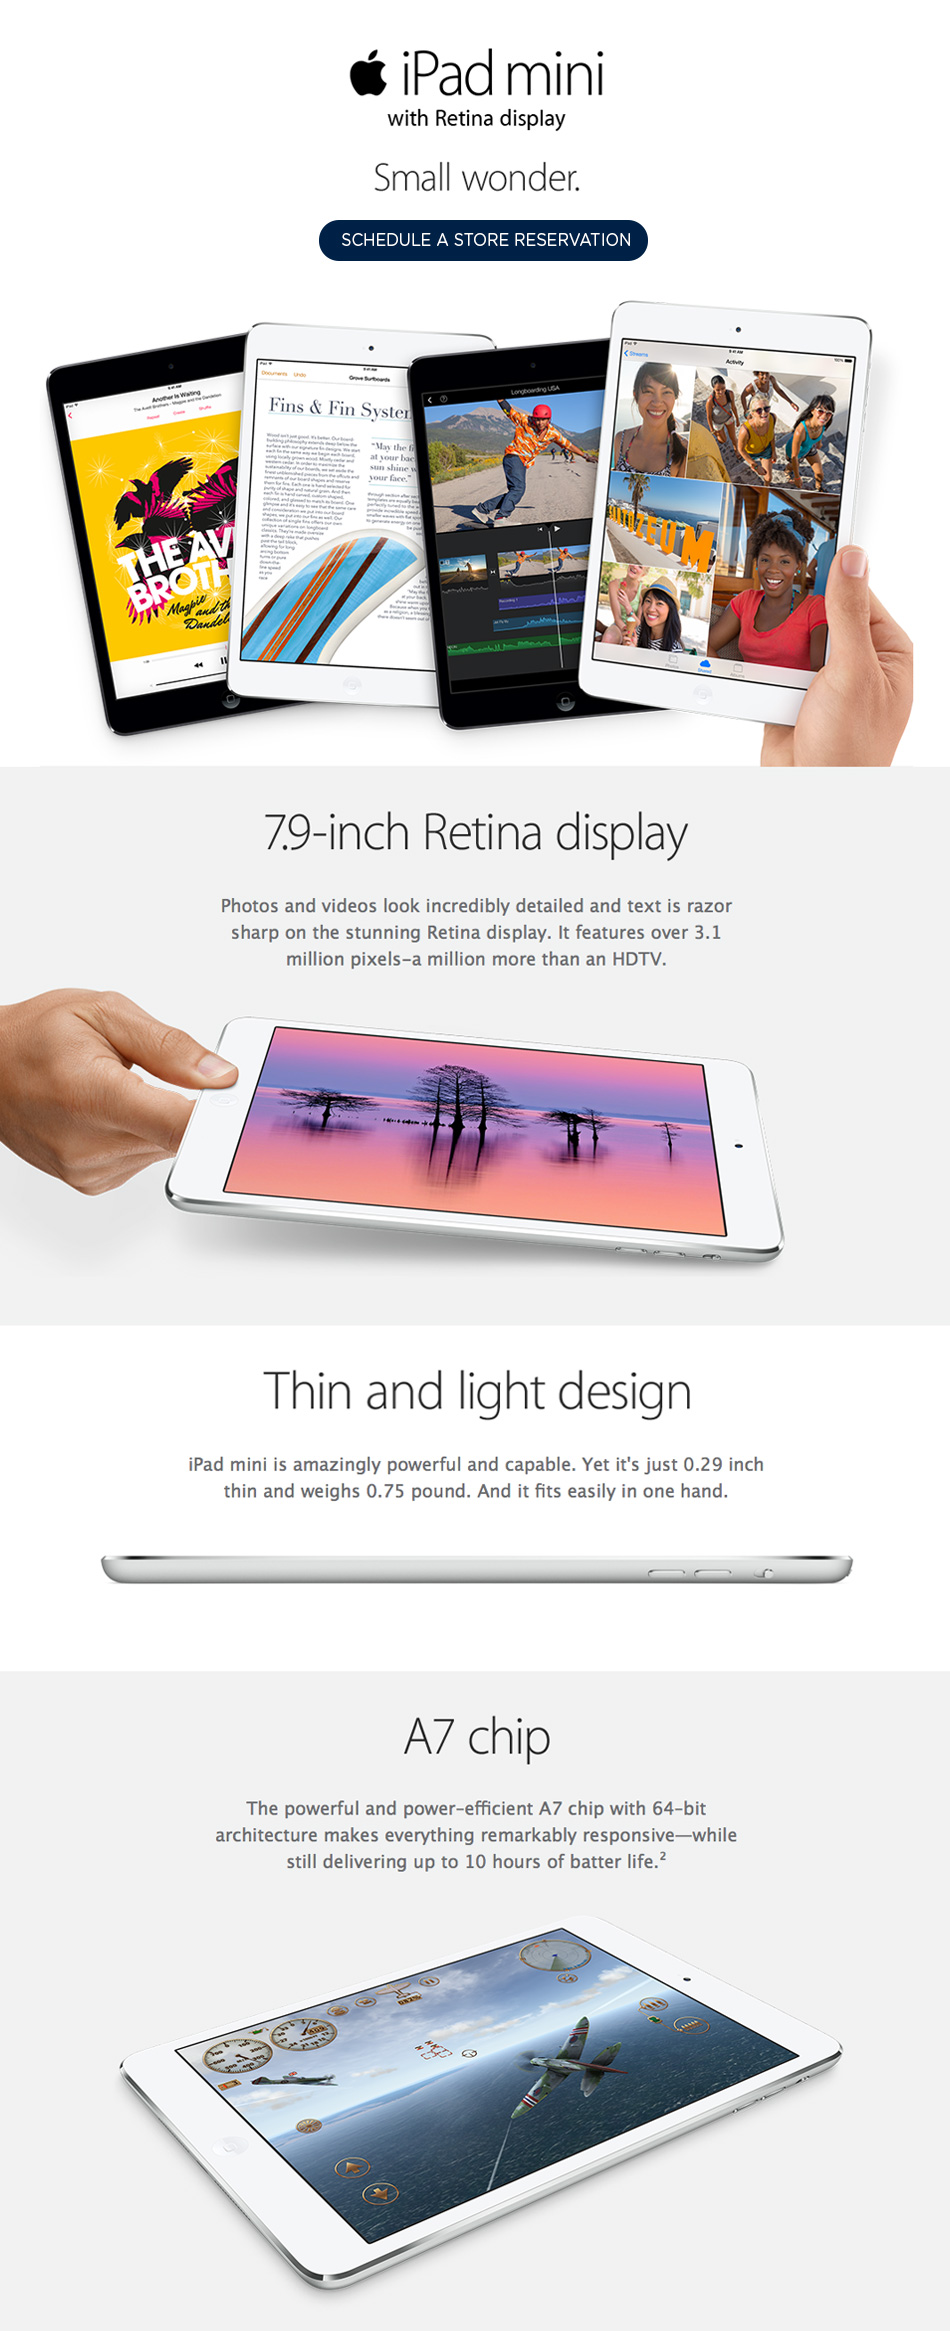 iPad mini with Retina display - Small wonder.